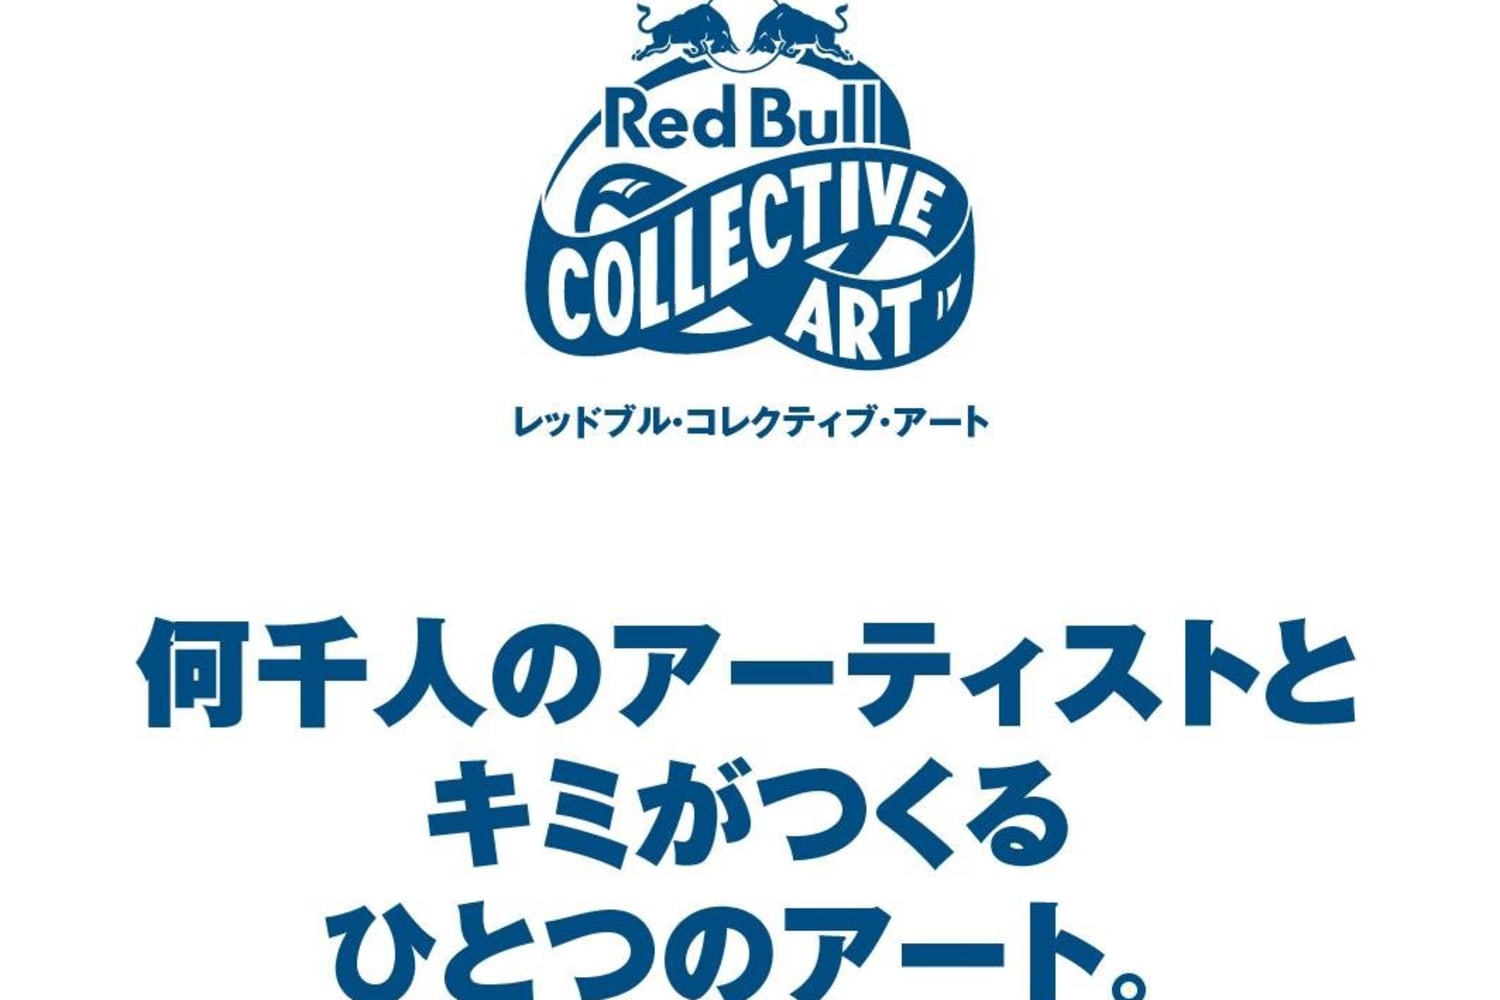 Red Bull Collective Art レッドブル コレクティブ アート 参加方法